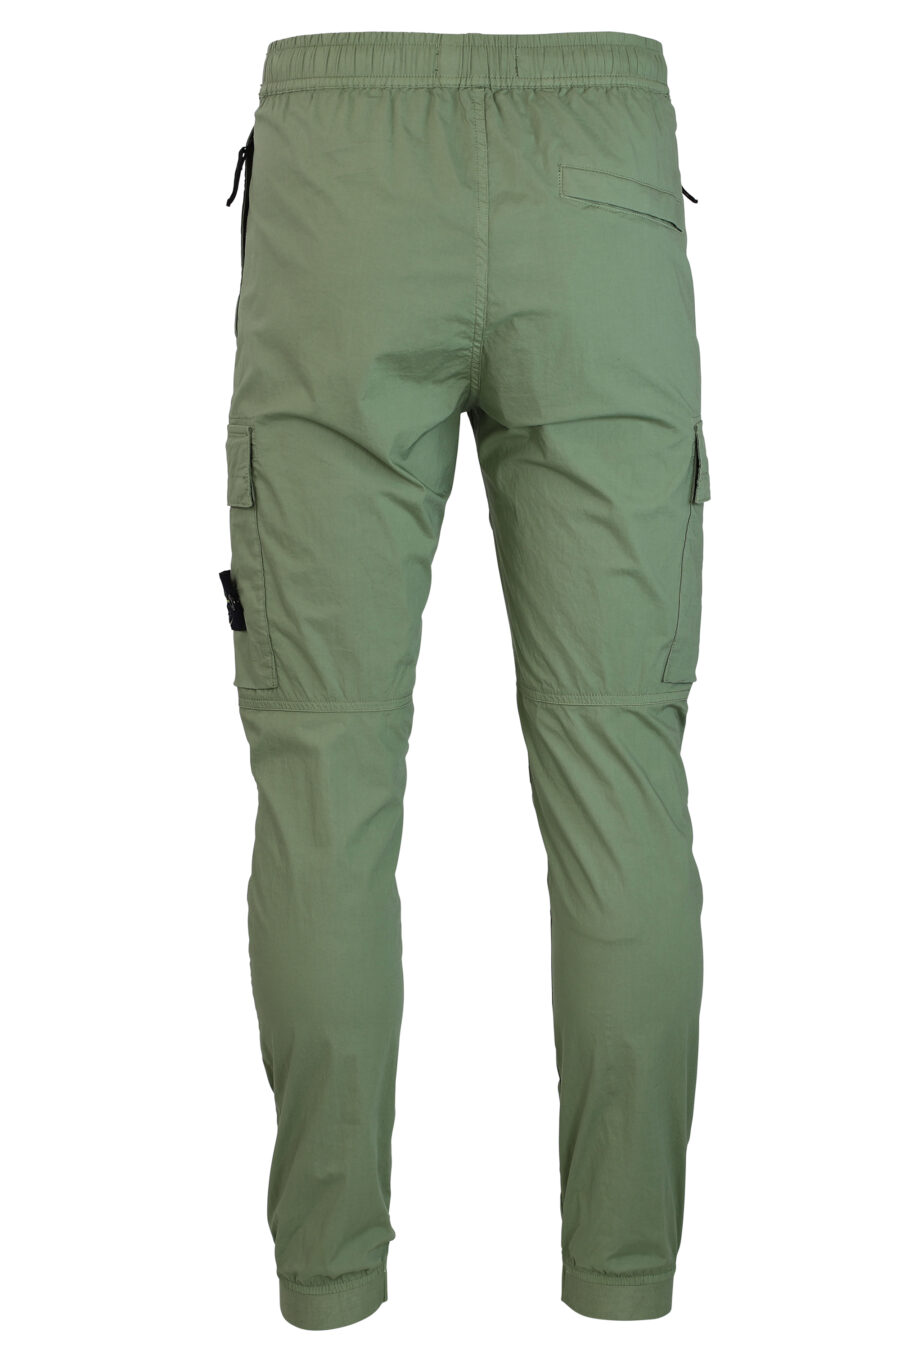 Pantalon cargo vert avec écusson - IMG 0285